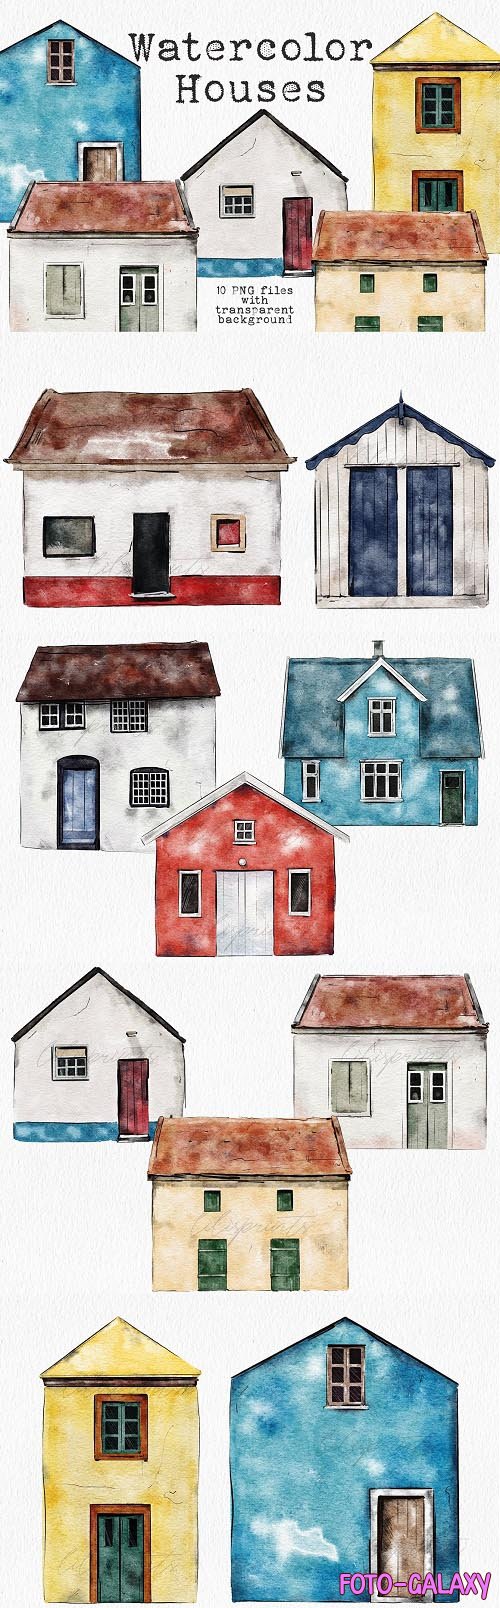 Watercolor icelandic houses - 6509095